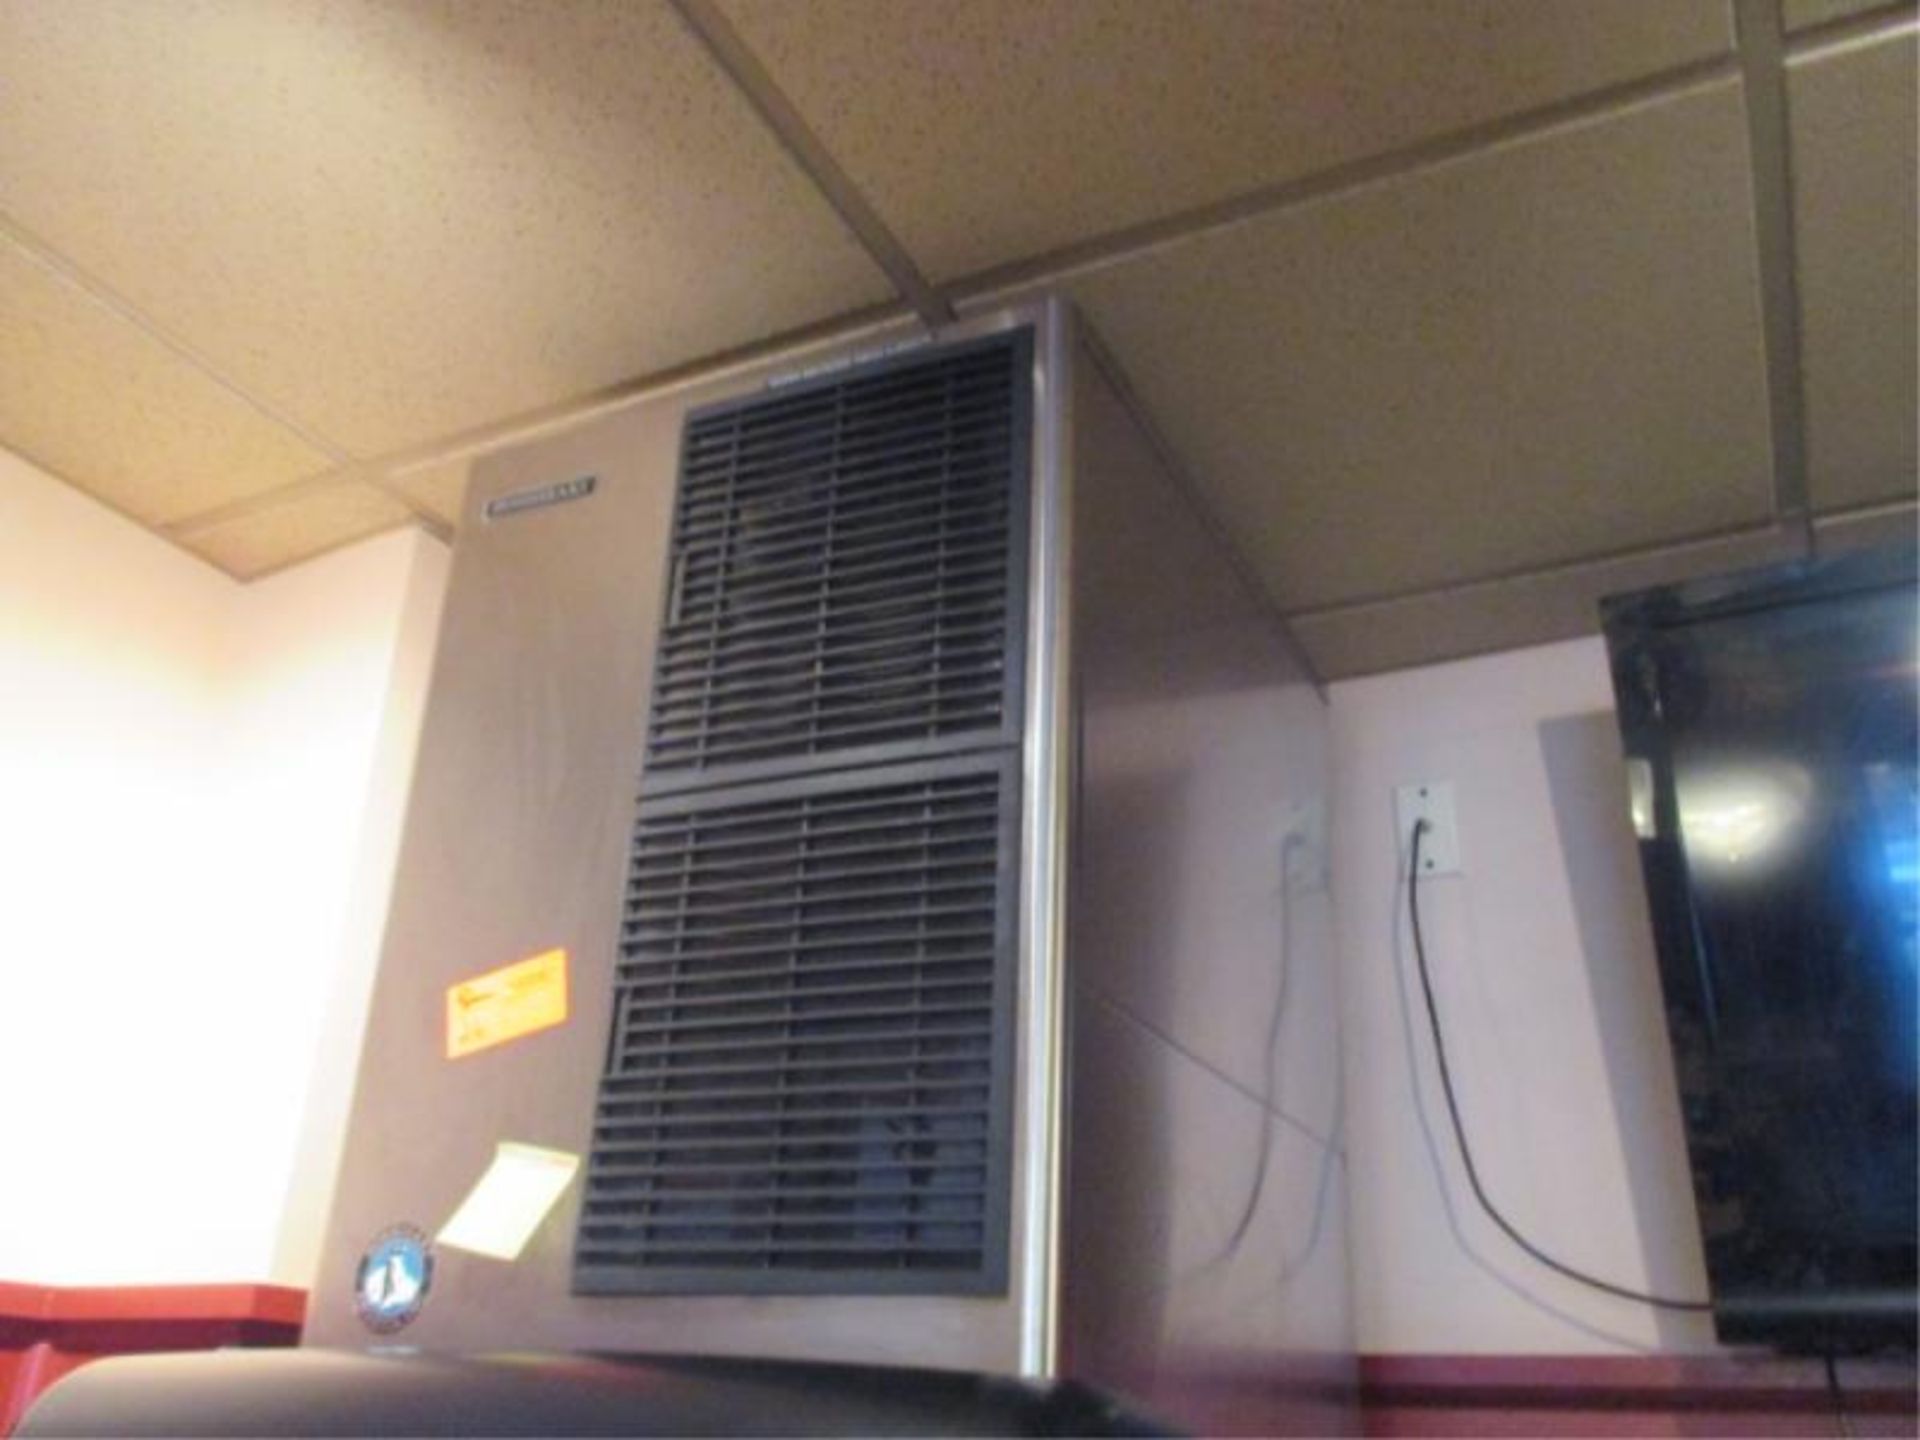 Hoshizaki Ice Machine, No Storage Means, Air Cooled